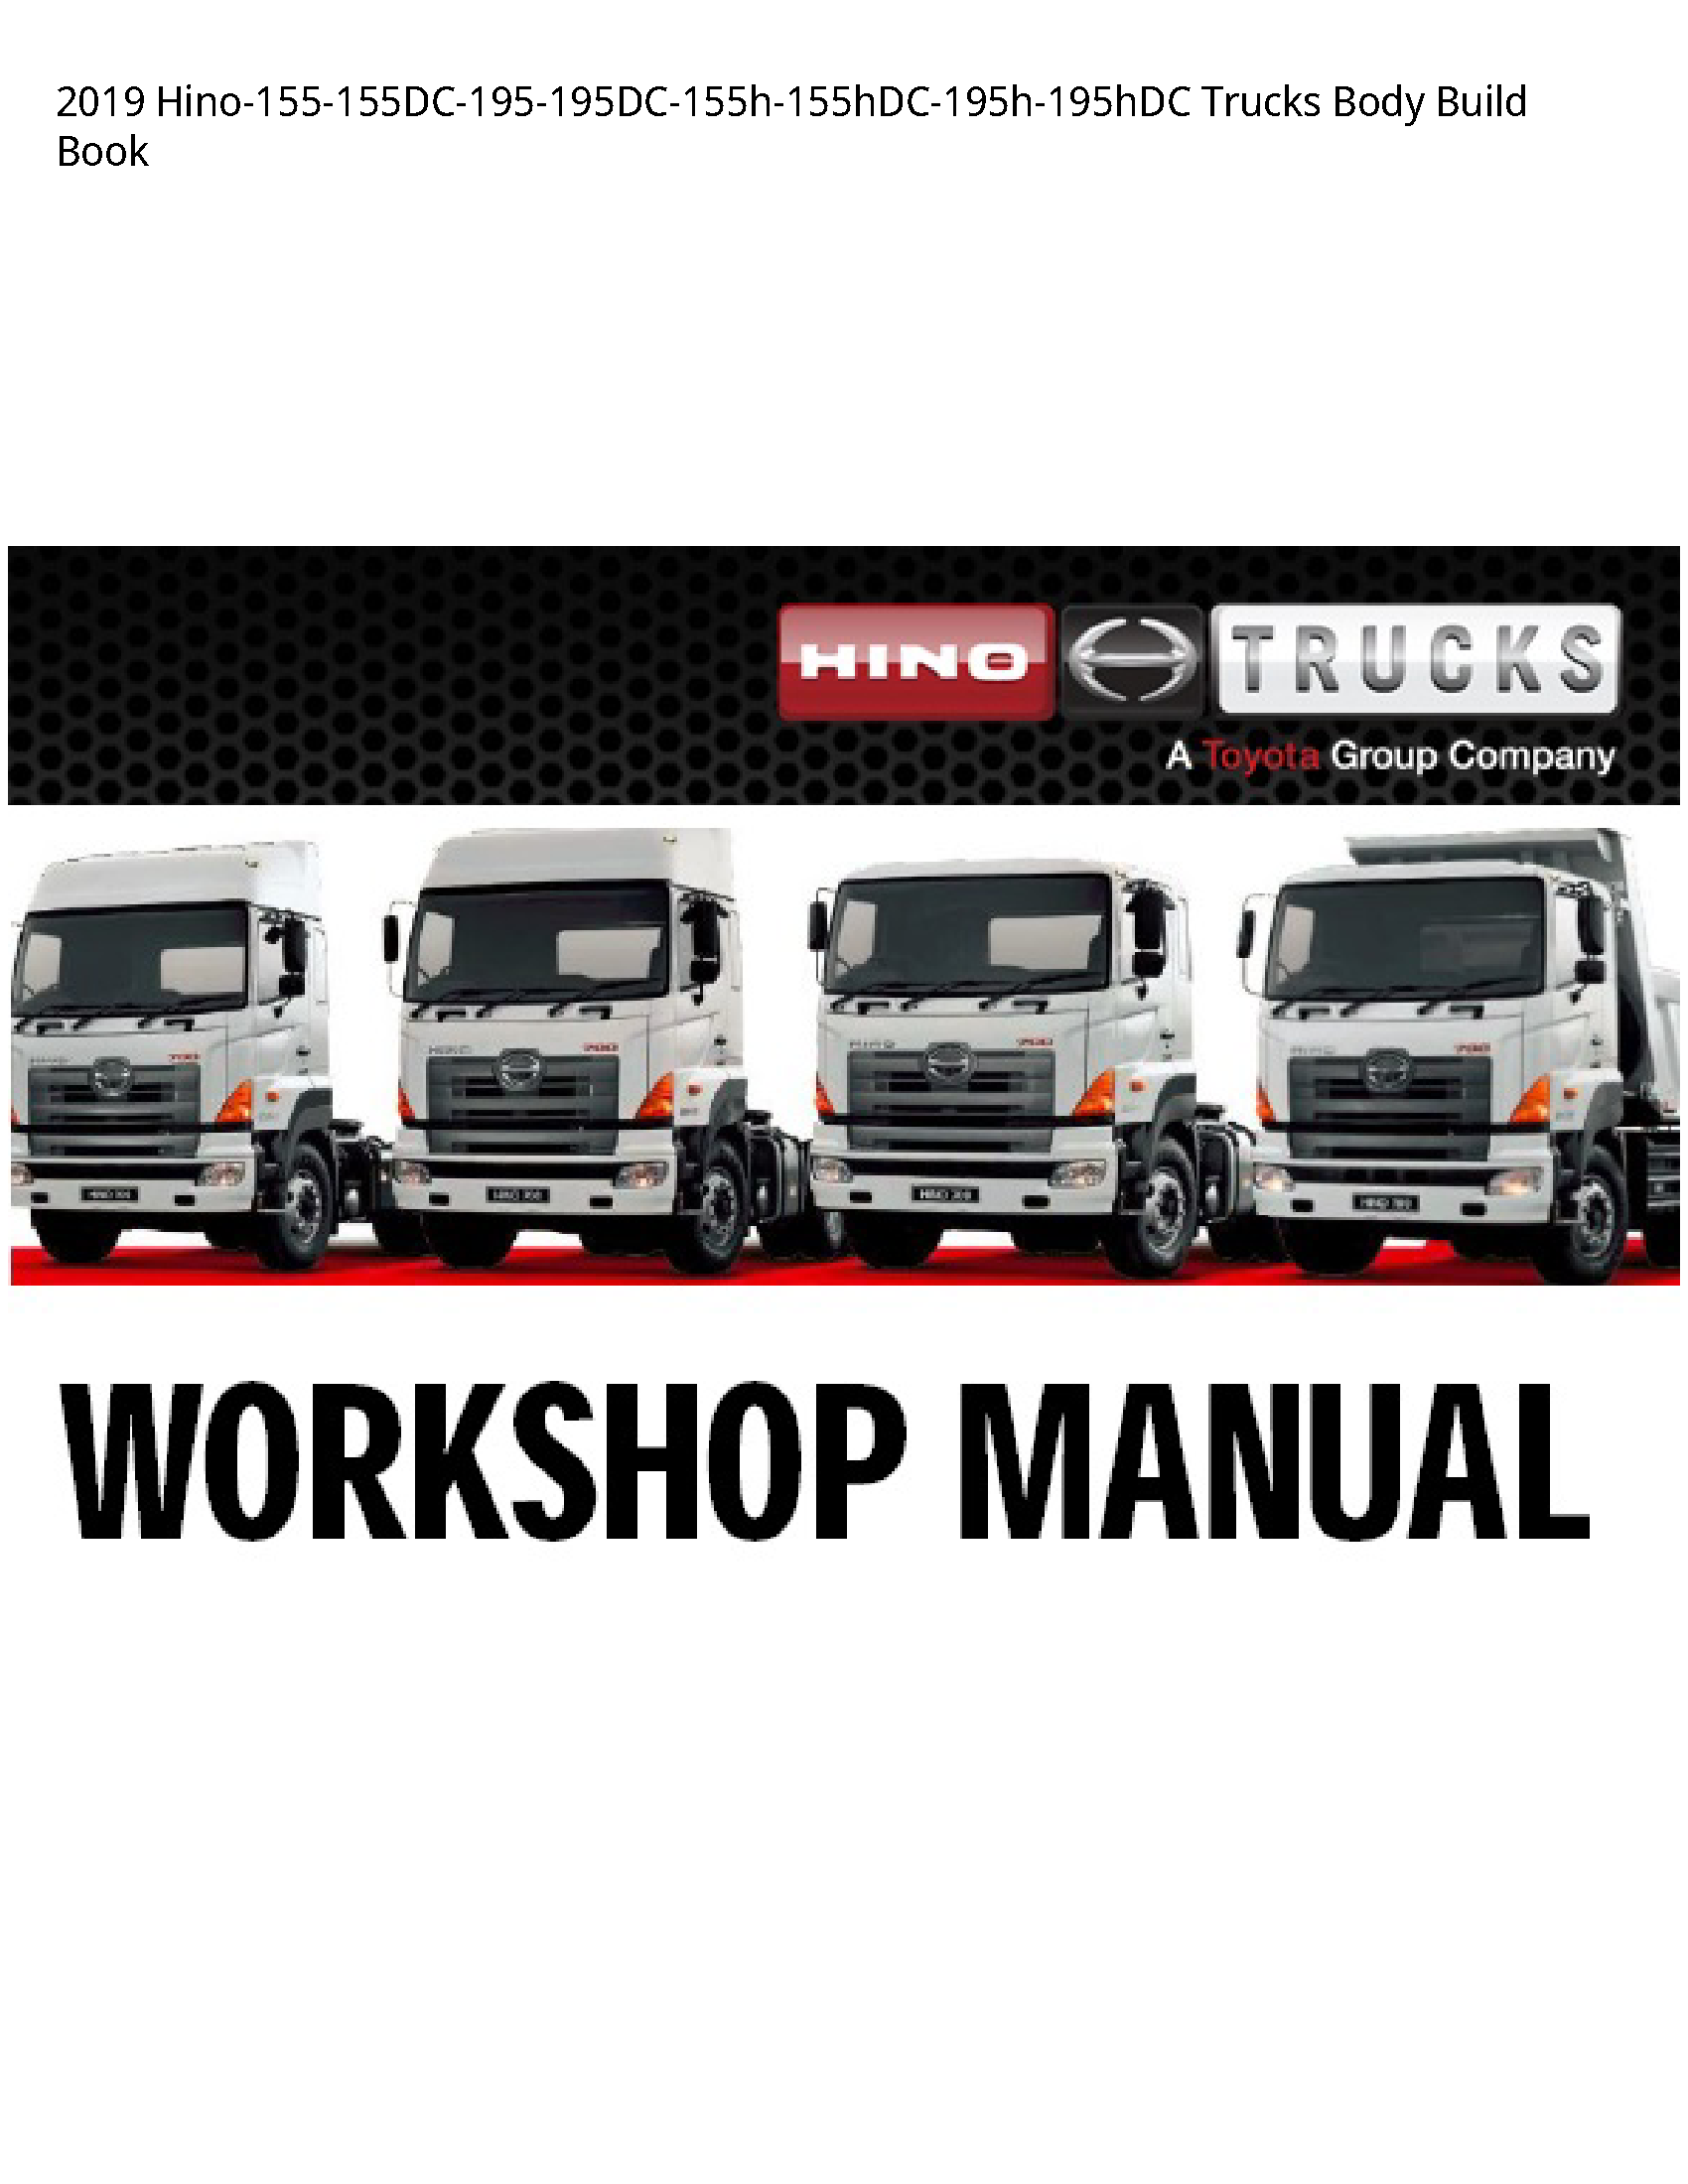 Hino -155-155DC-195-195DC-155h-155hDC-195h-195hDC Trucks Body Build Book manual